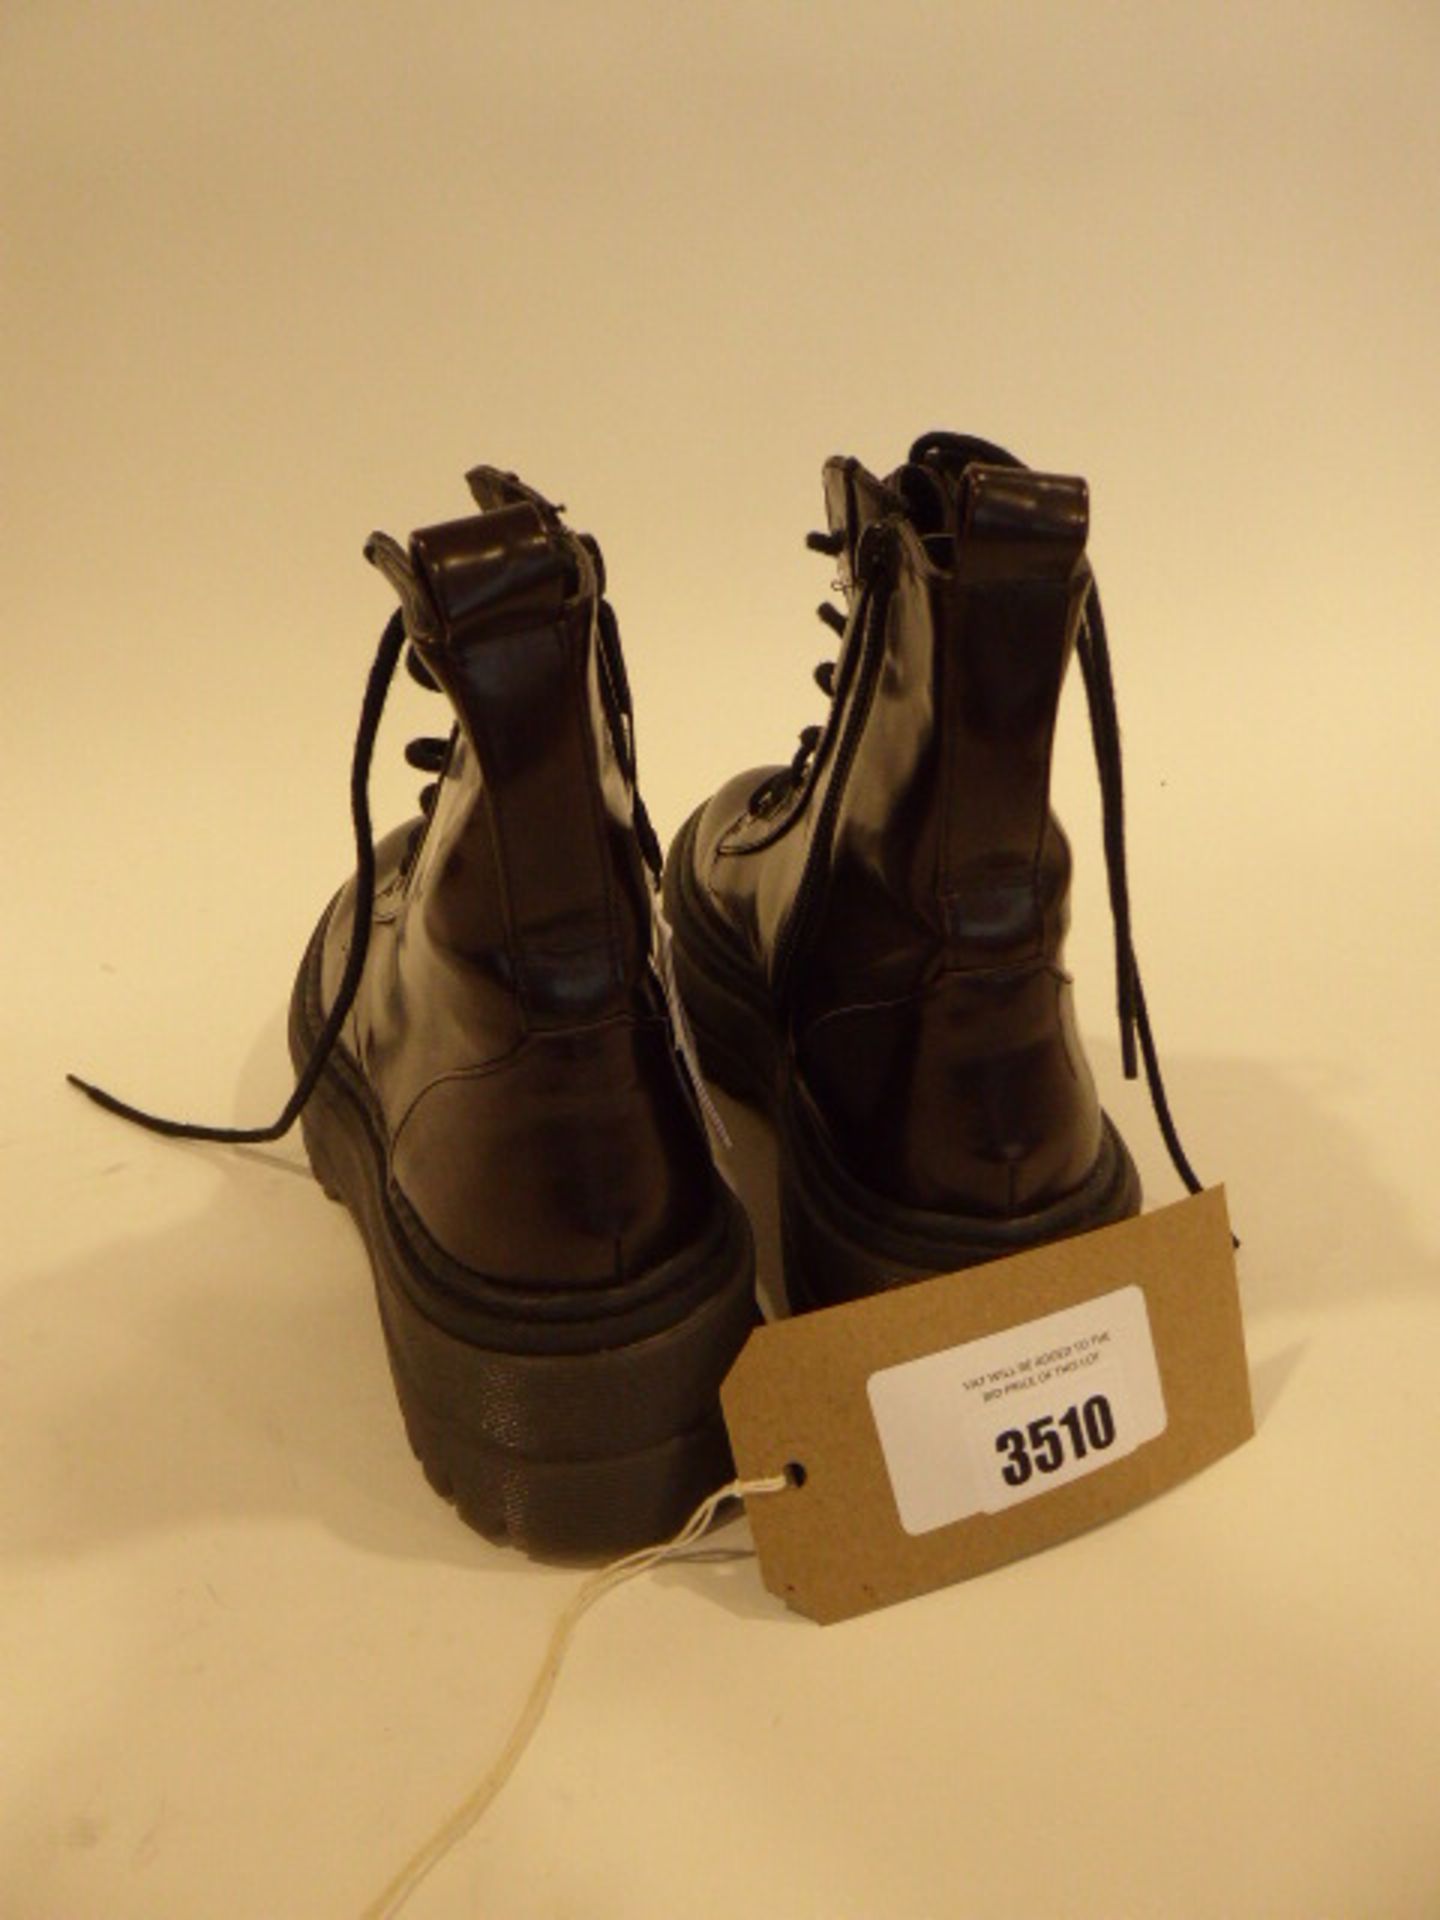 3510 - Bershka ankle boots size EU 37 - Image 3 of 3